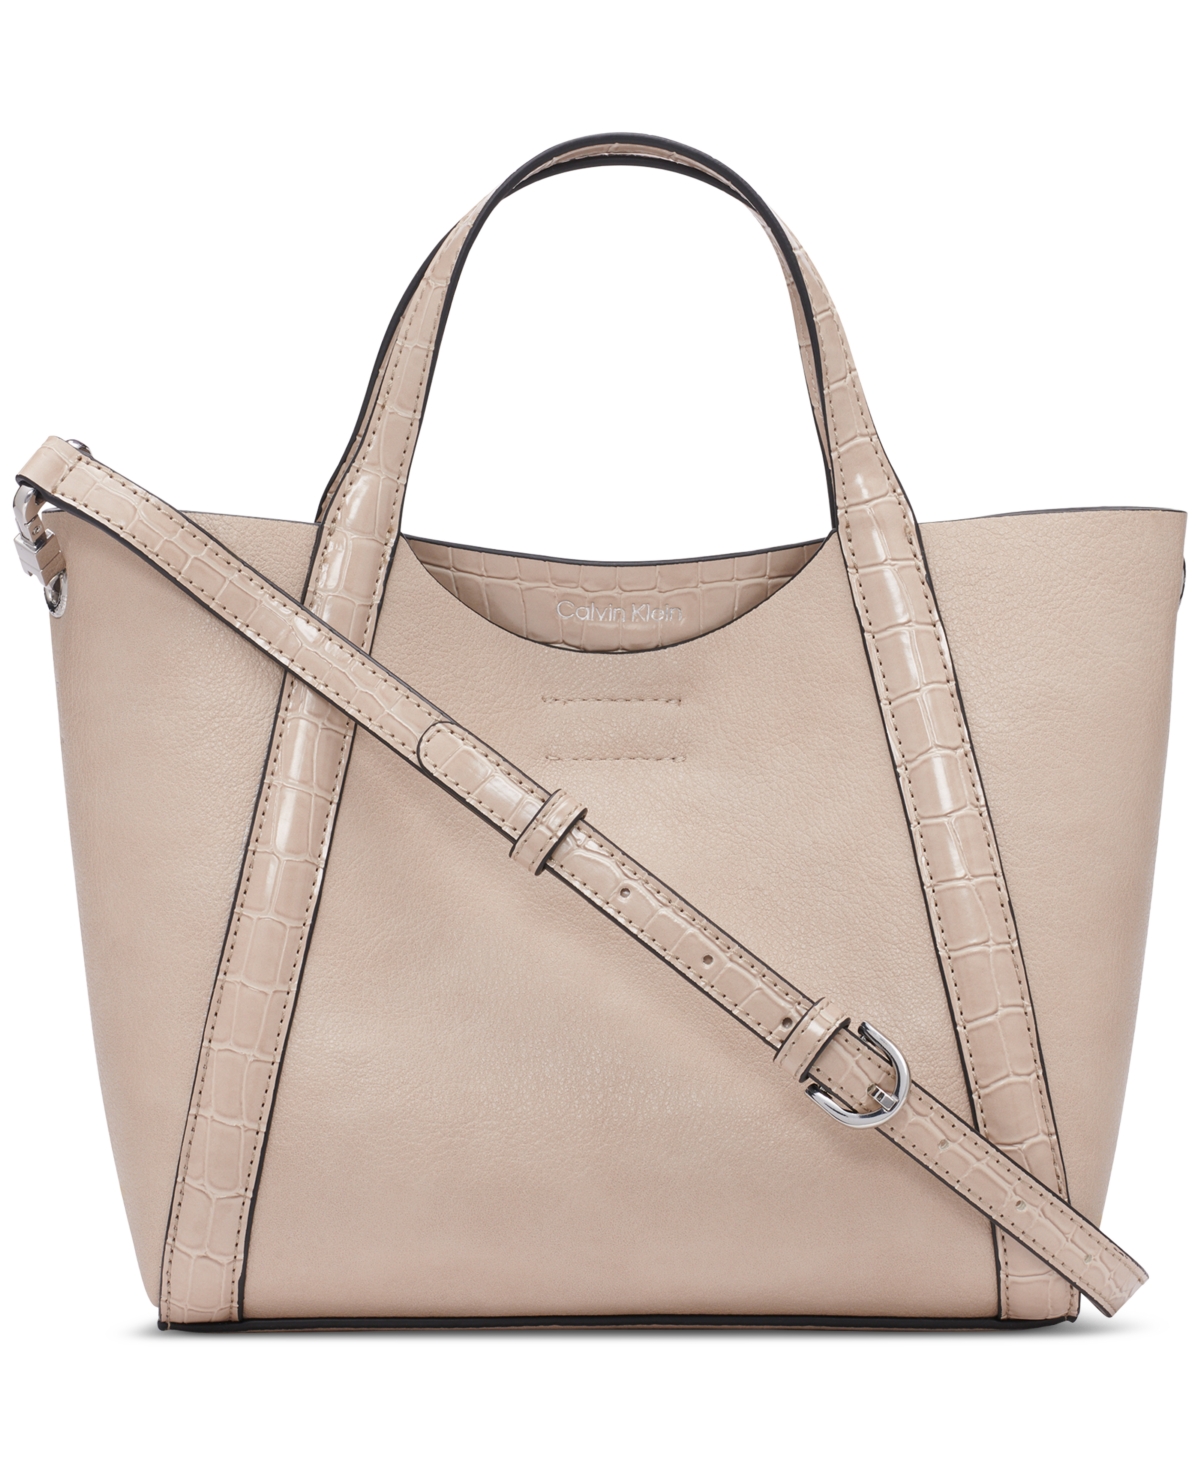 Convertible shoulder bag, beige grey, Calvin Klein